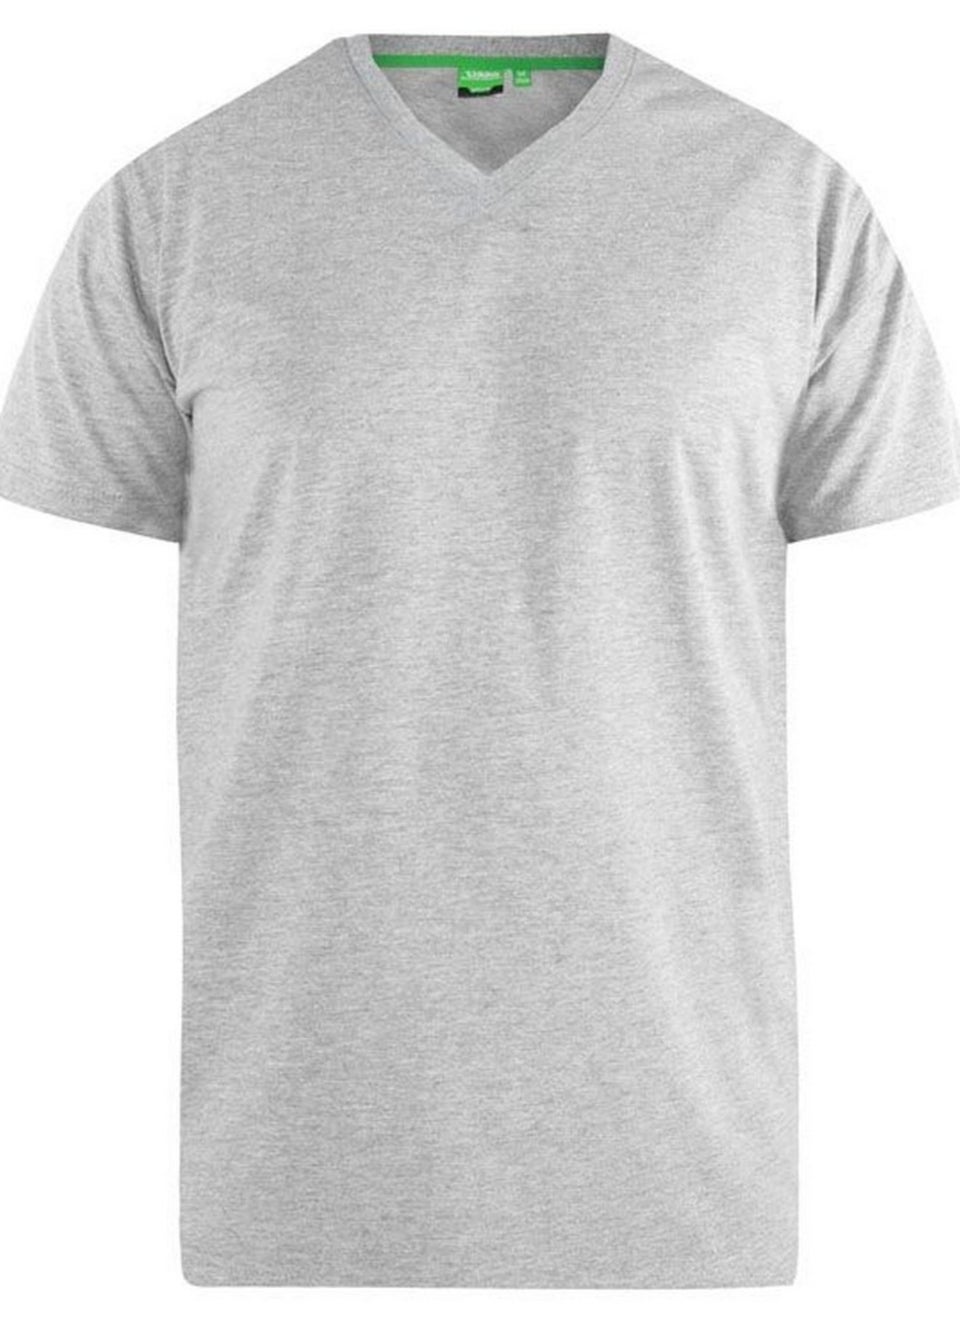 Duke Grey/White Fenton Round Neck T-shirts (Pack of 2)